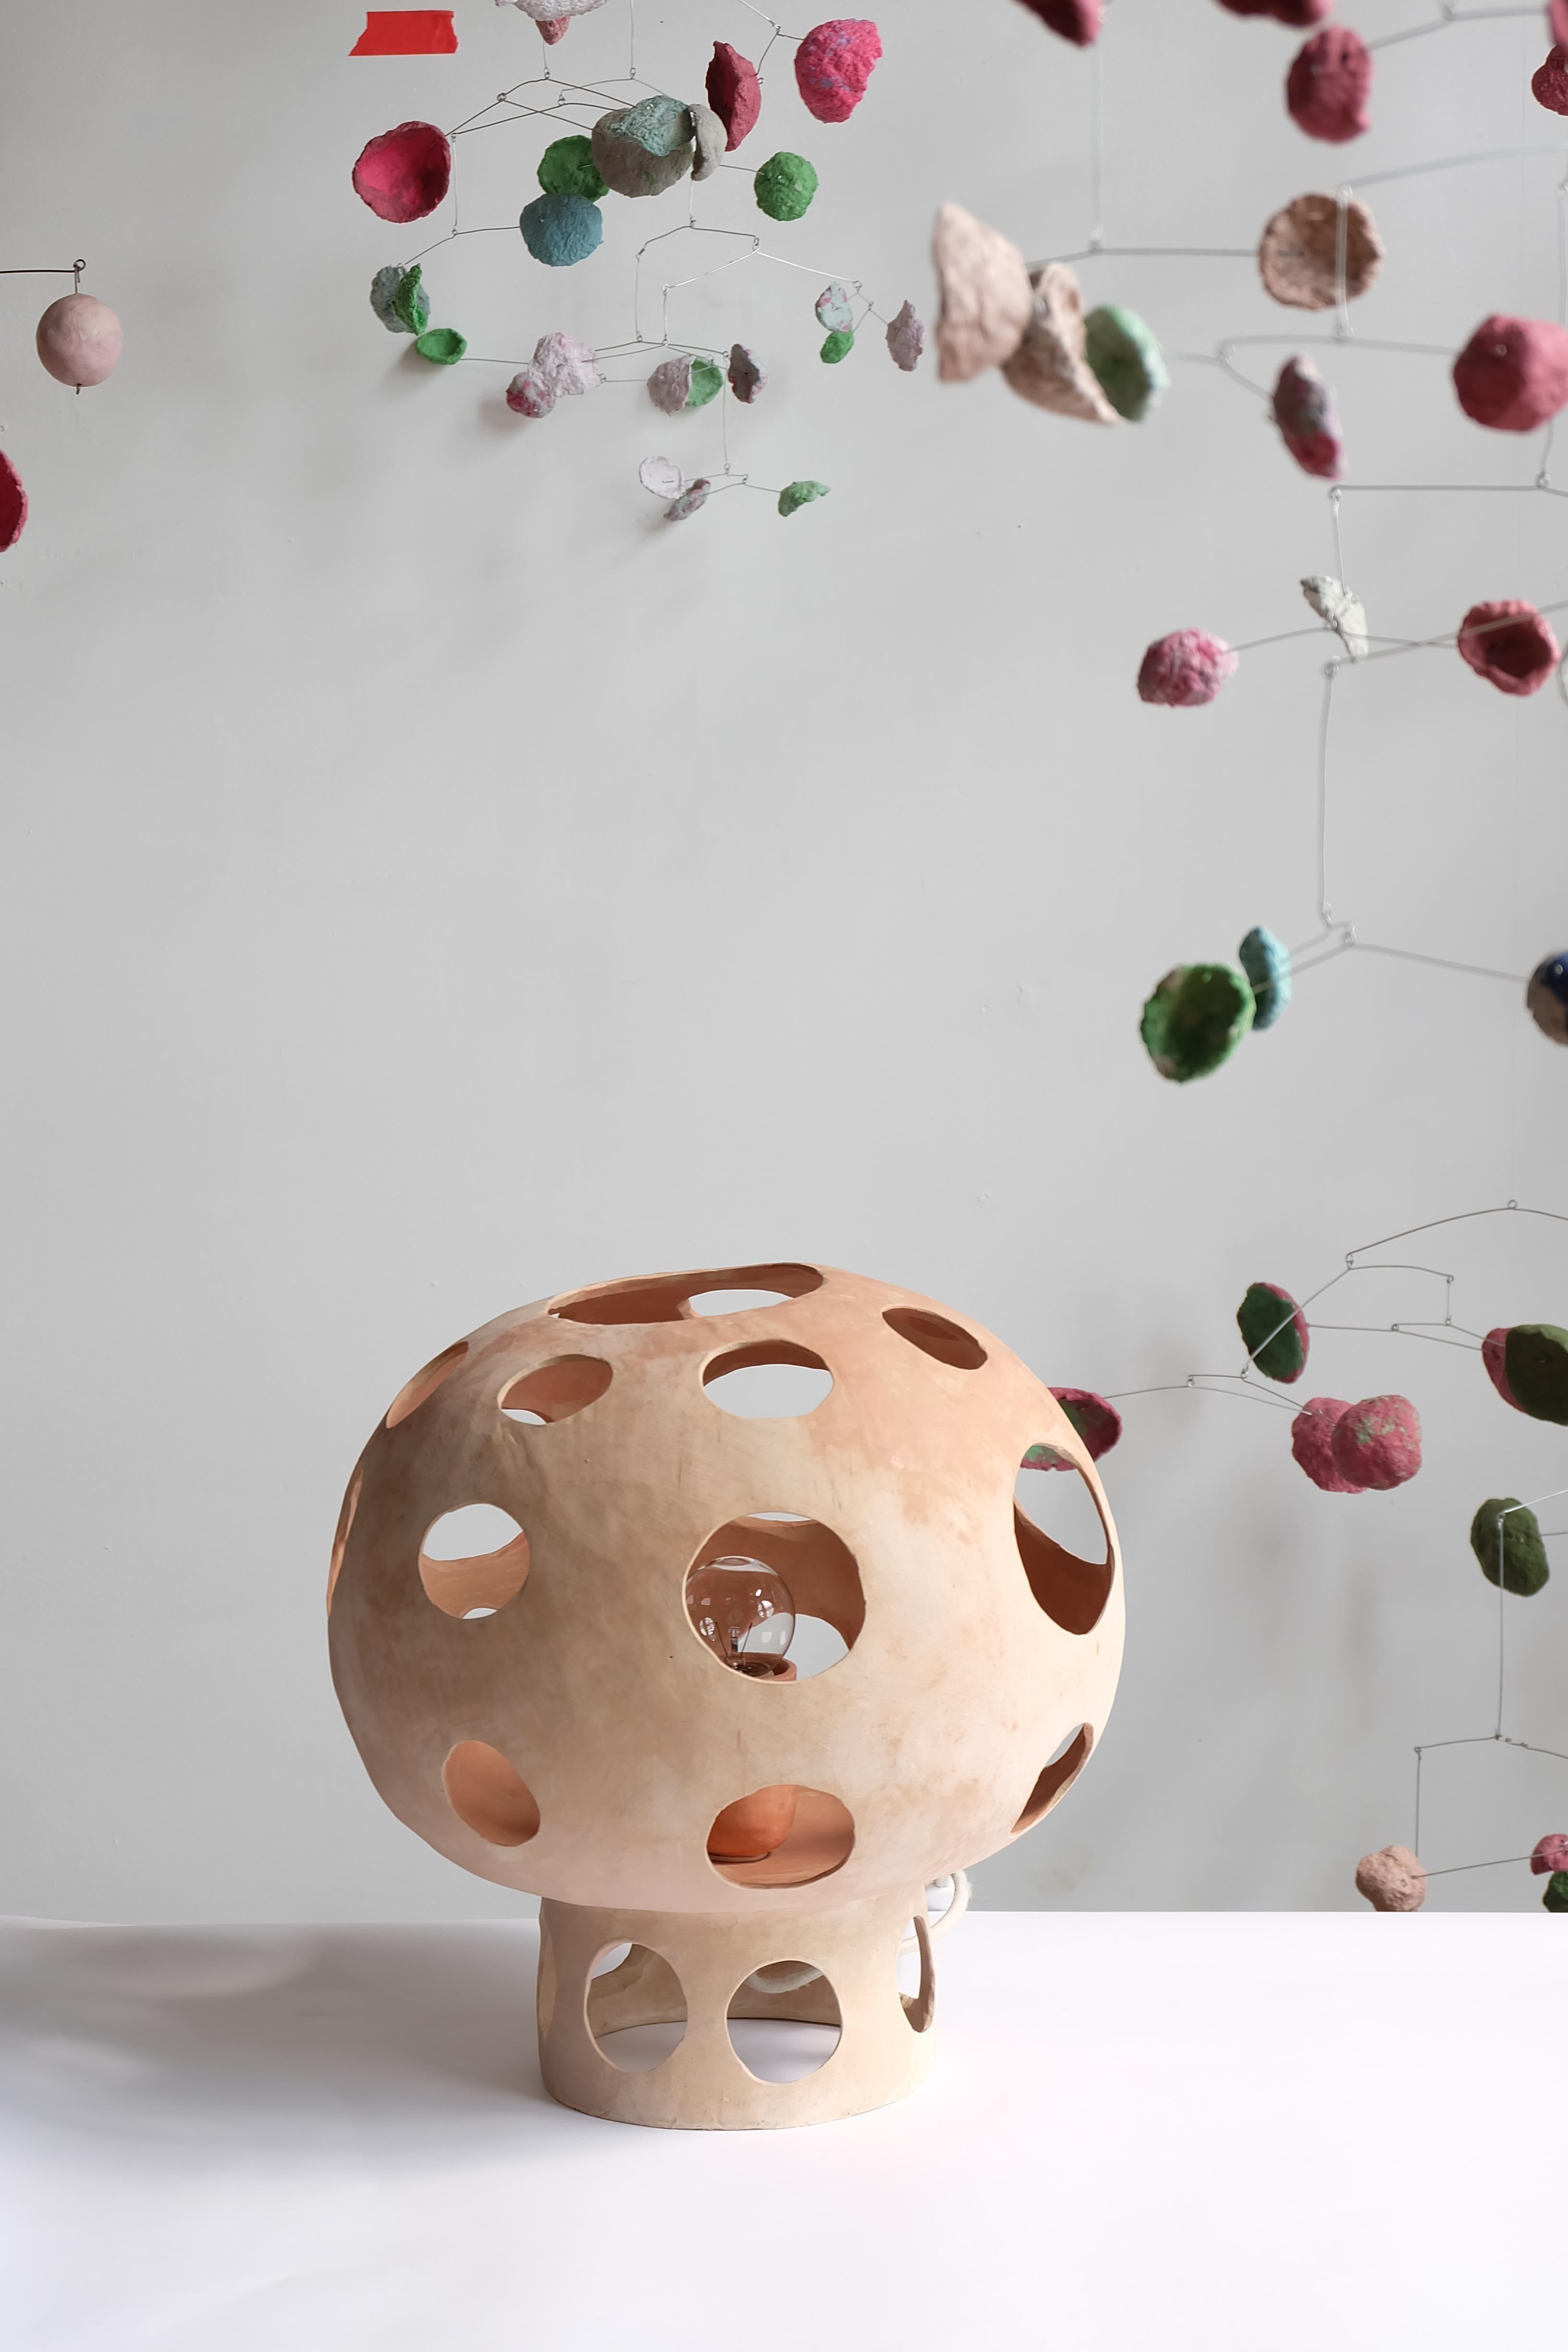 American Contemporary Sculptural Hand-Built Ceramic Mushroom-Shaped Table Lamp